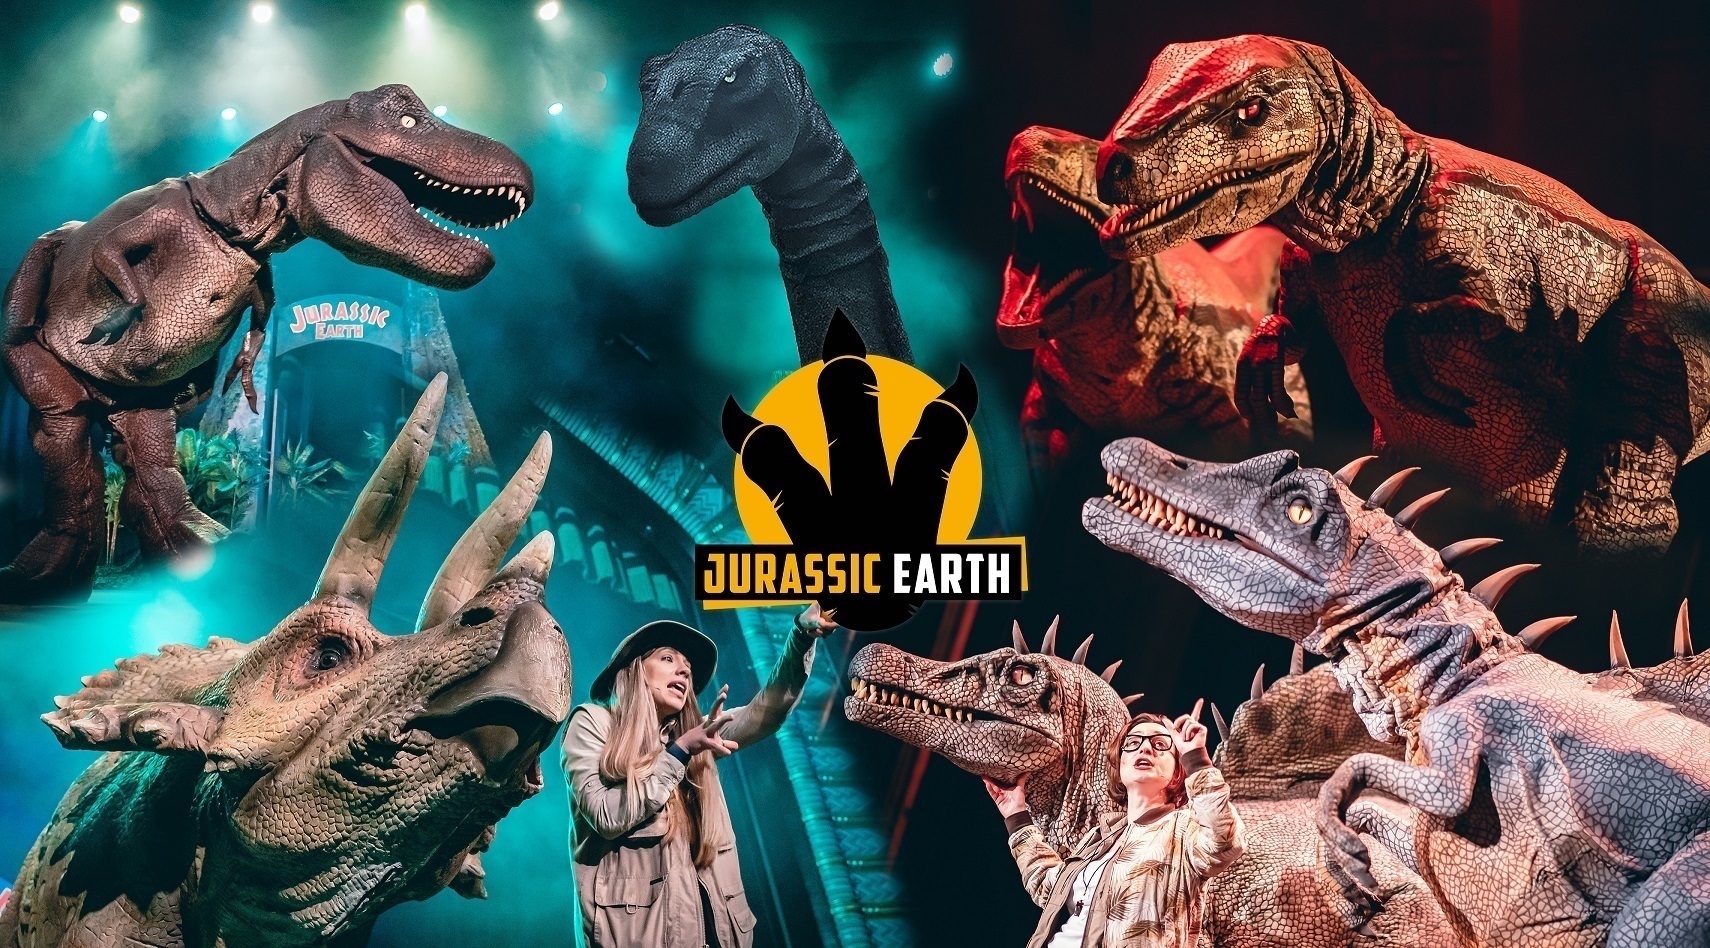 Jurassic Earth Dinosaur Theatre Show - Buxton Opera House Derbyshire Cheshire - Friday 28th October, Buxton, England, United Kingdom